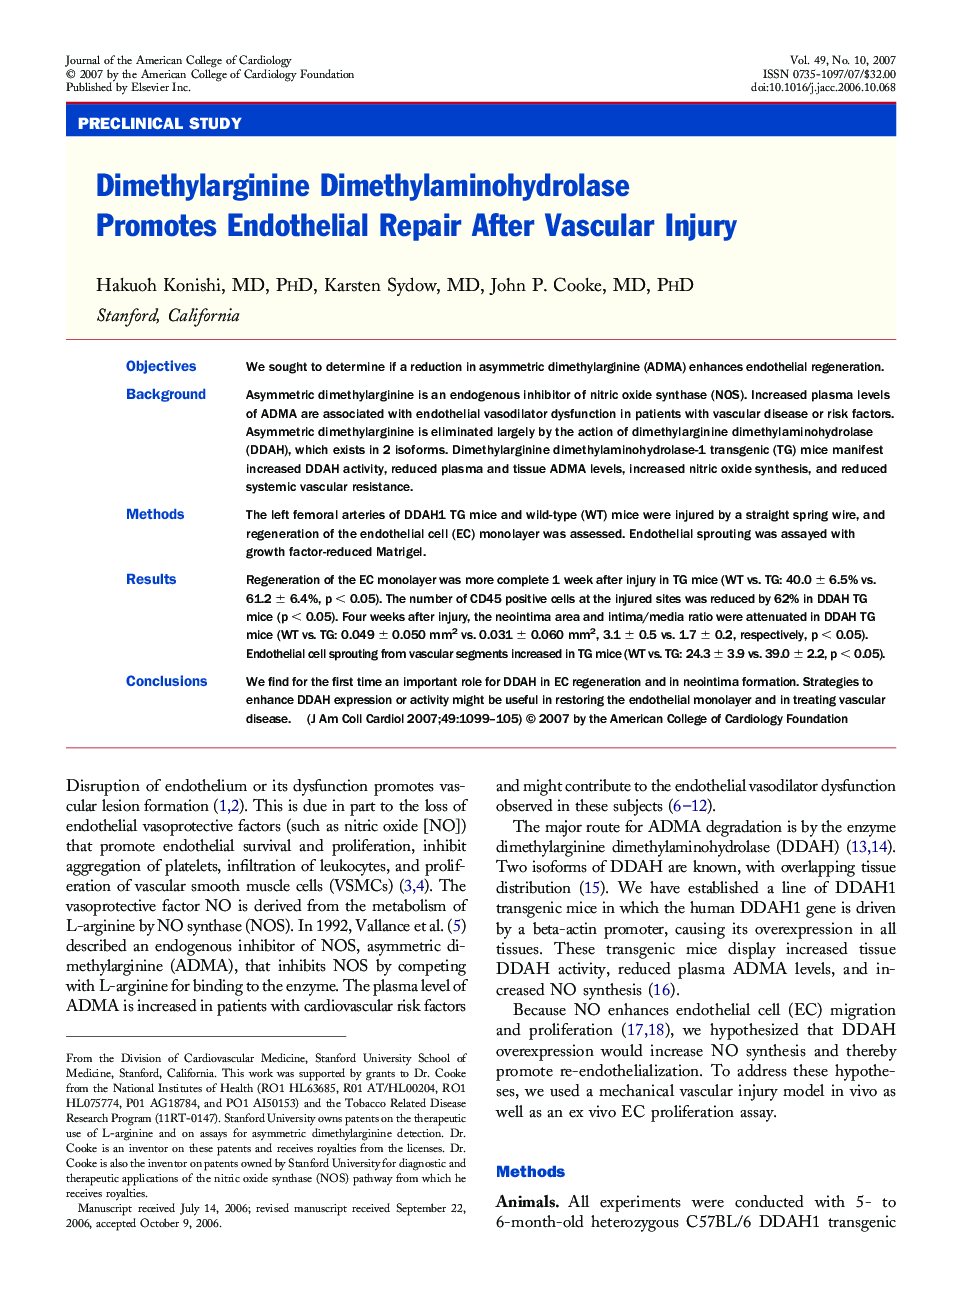 Dimethylarginine Dimethylaminohydrolase Promotes Endothelial Repair After Vascular Injury 